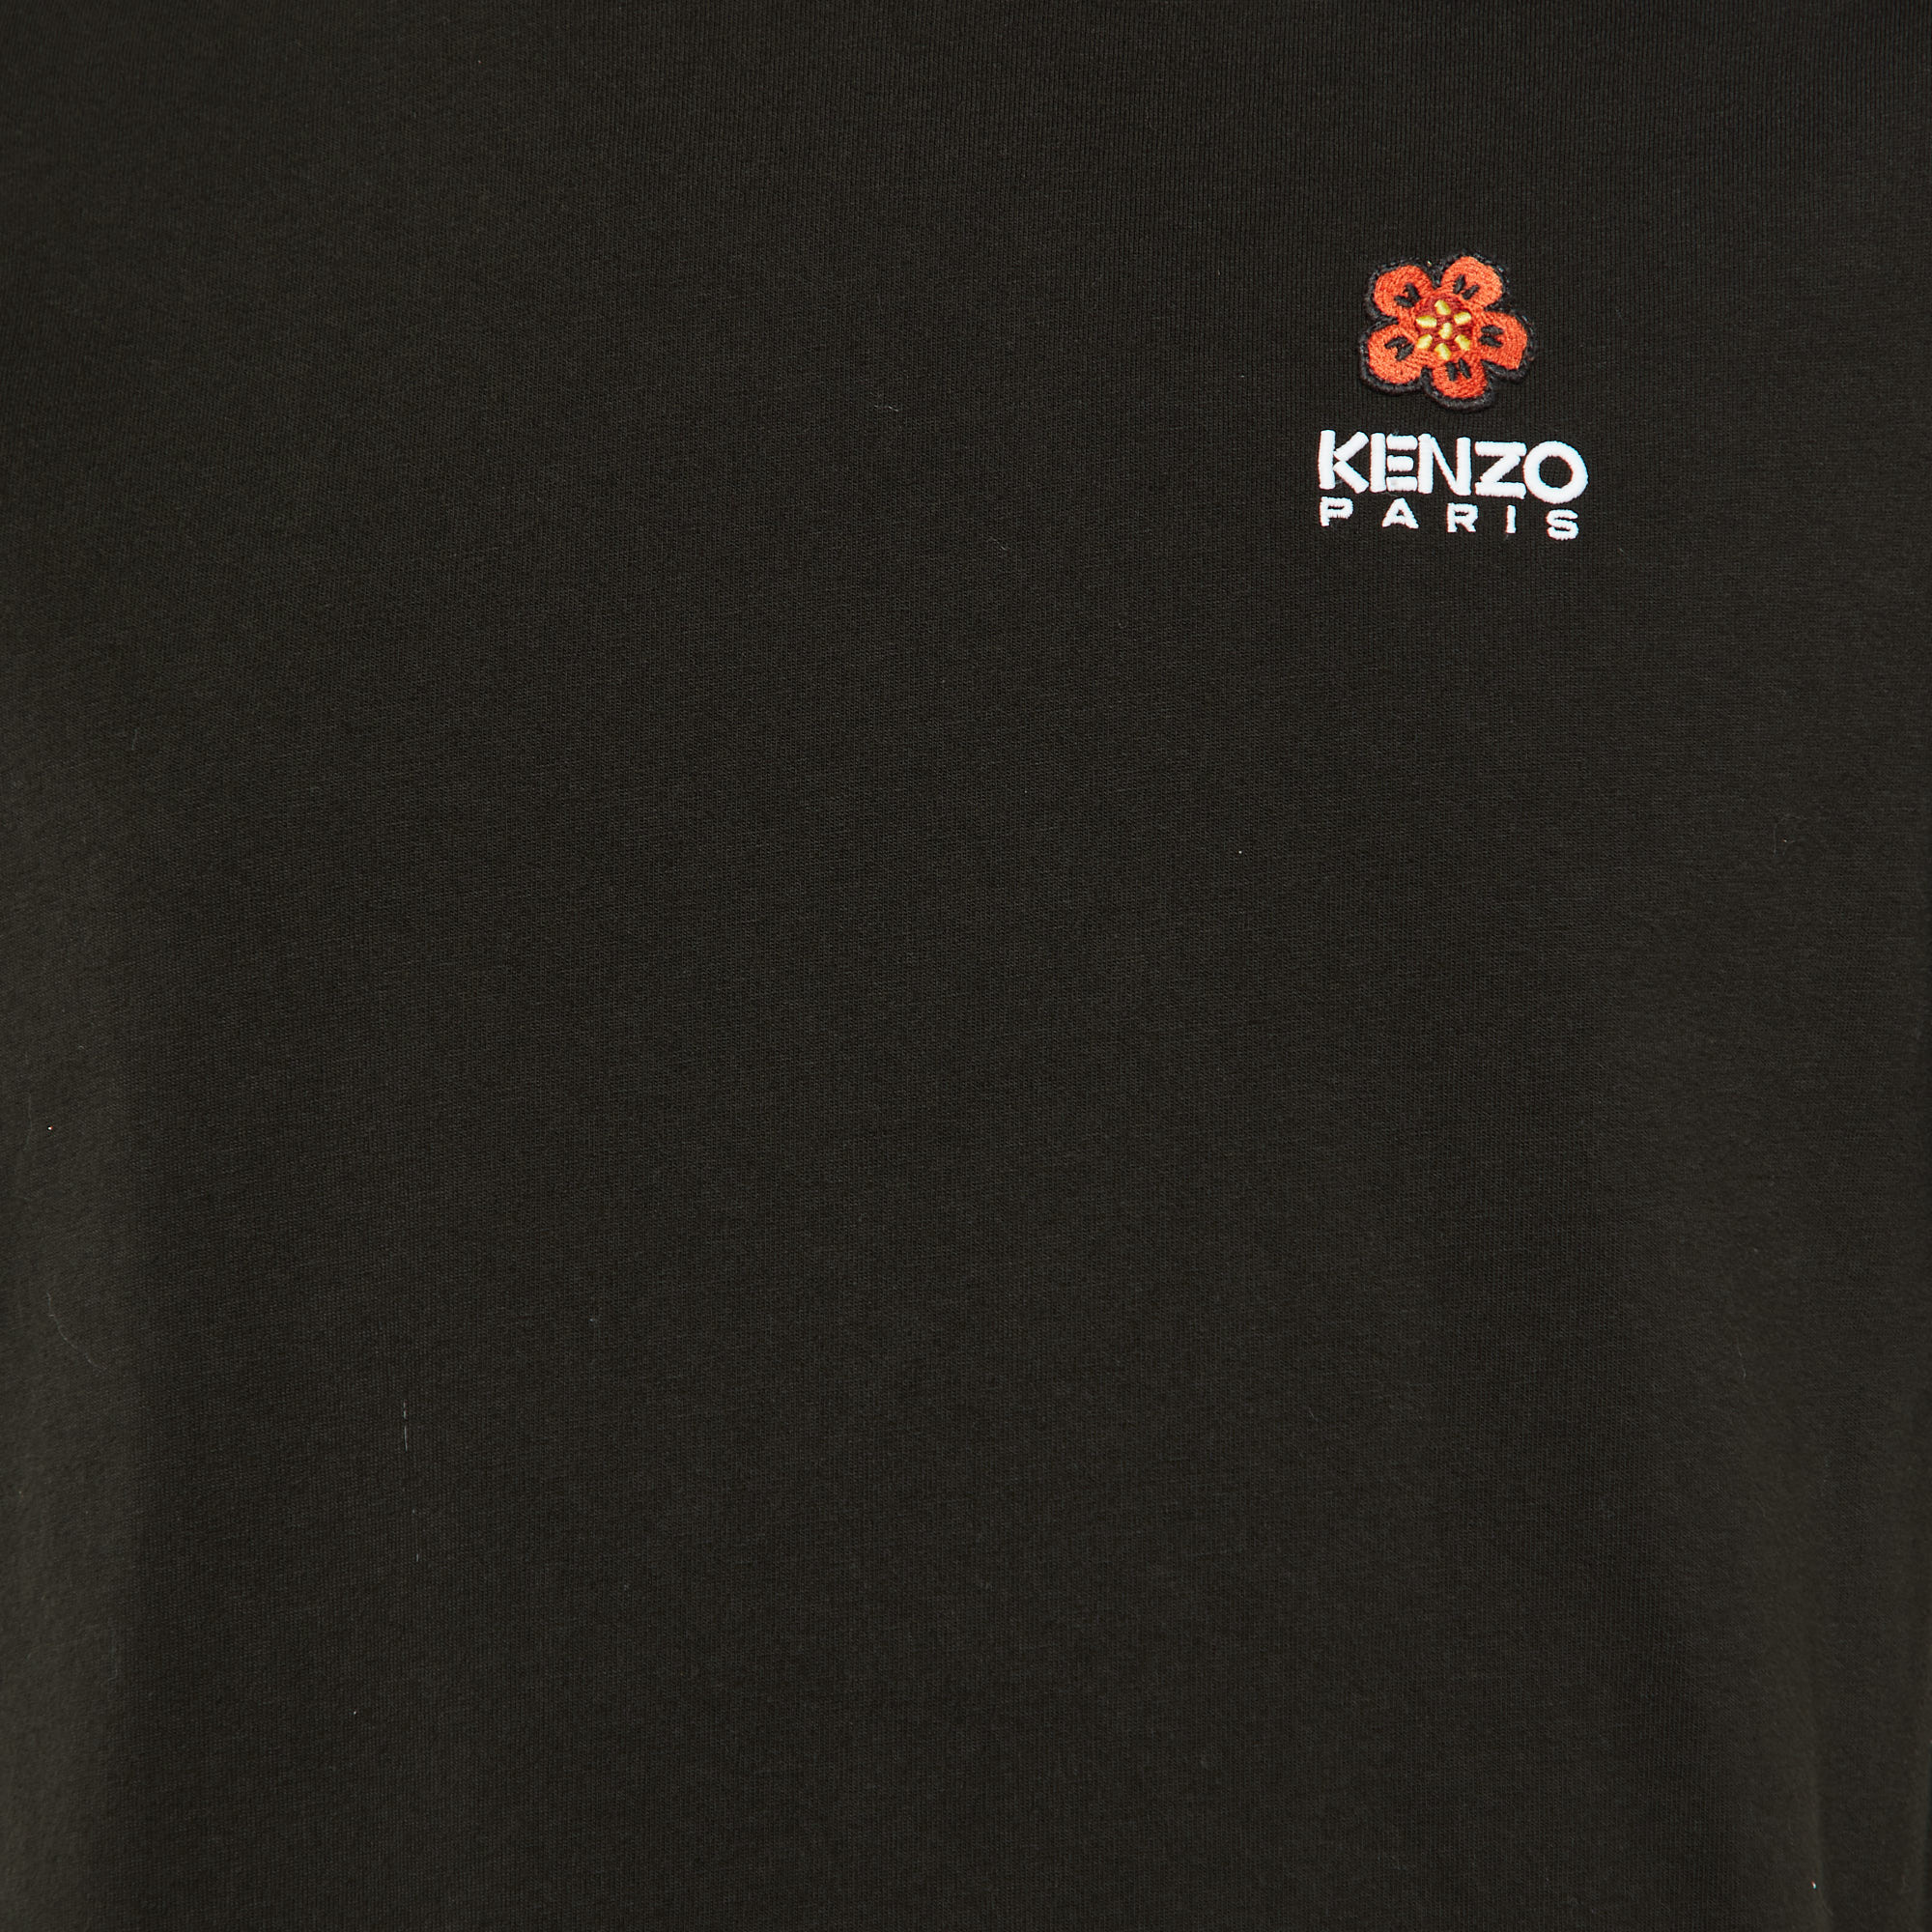 Kenzo Black Cotton Knit Boke Flower Applique T-Shirt S